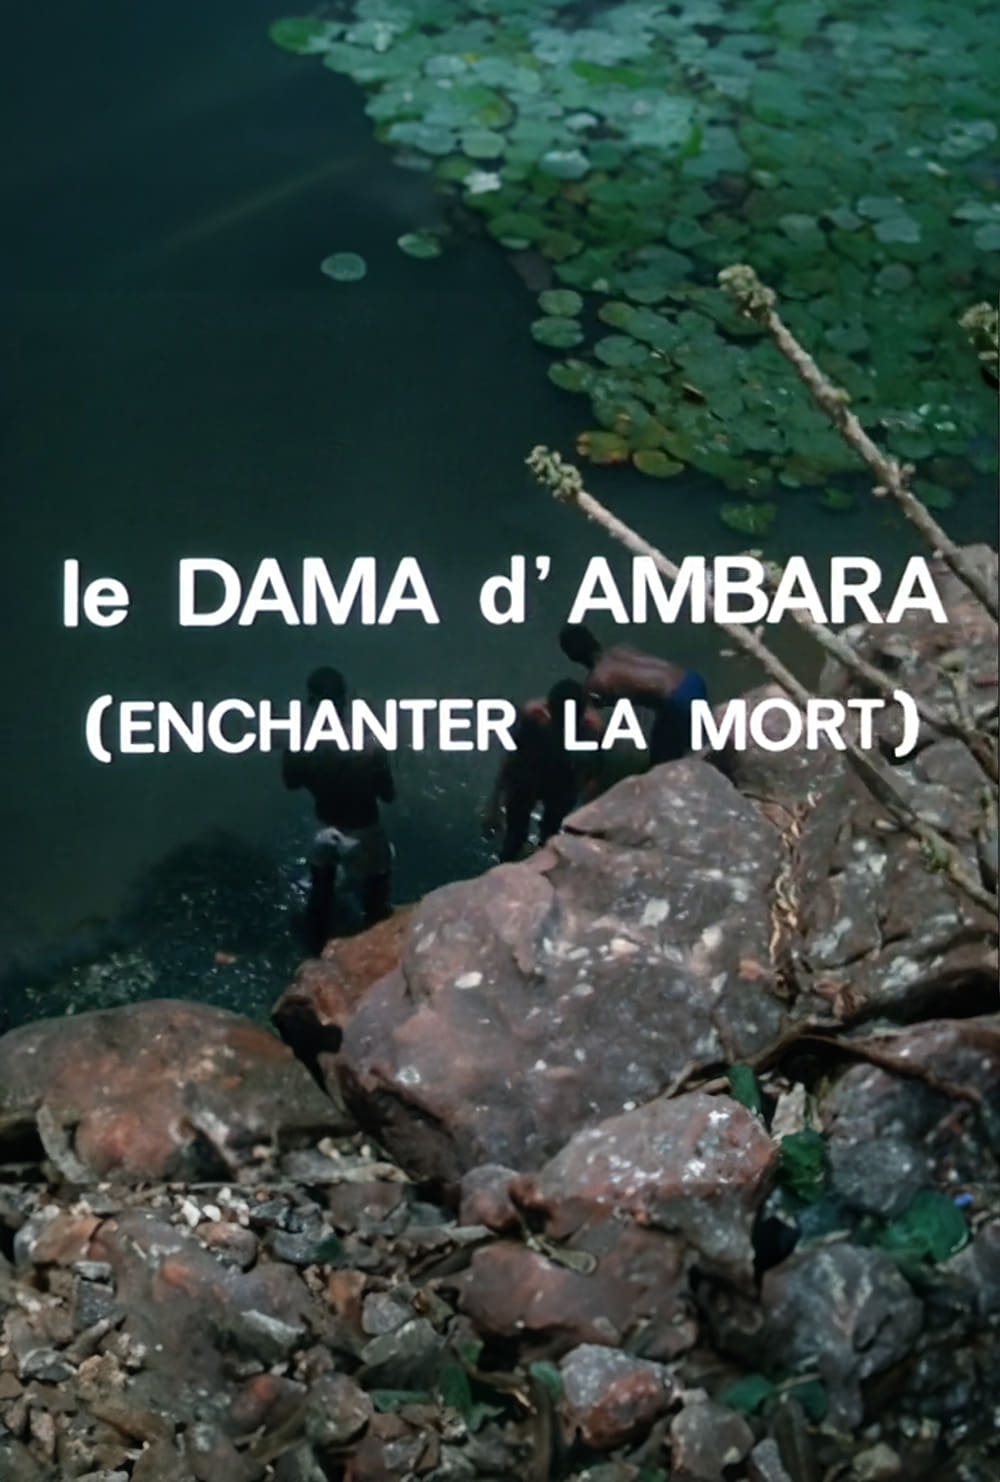 The Dama of Ambara: To Enchant Death